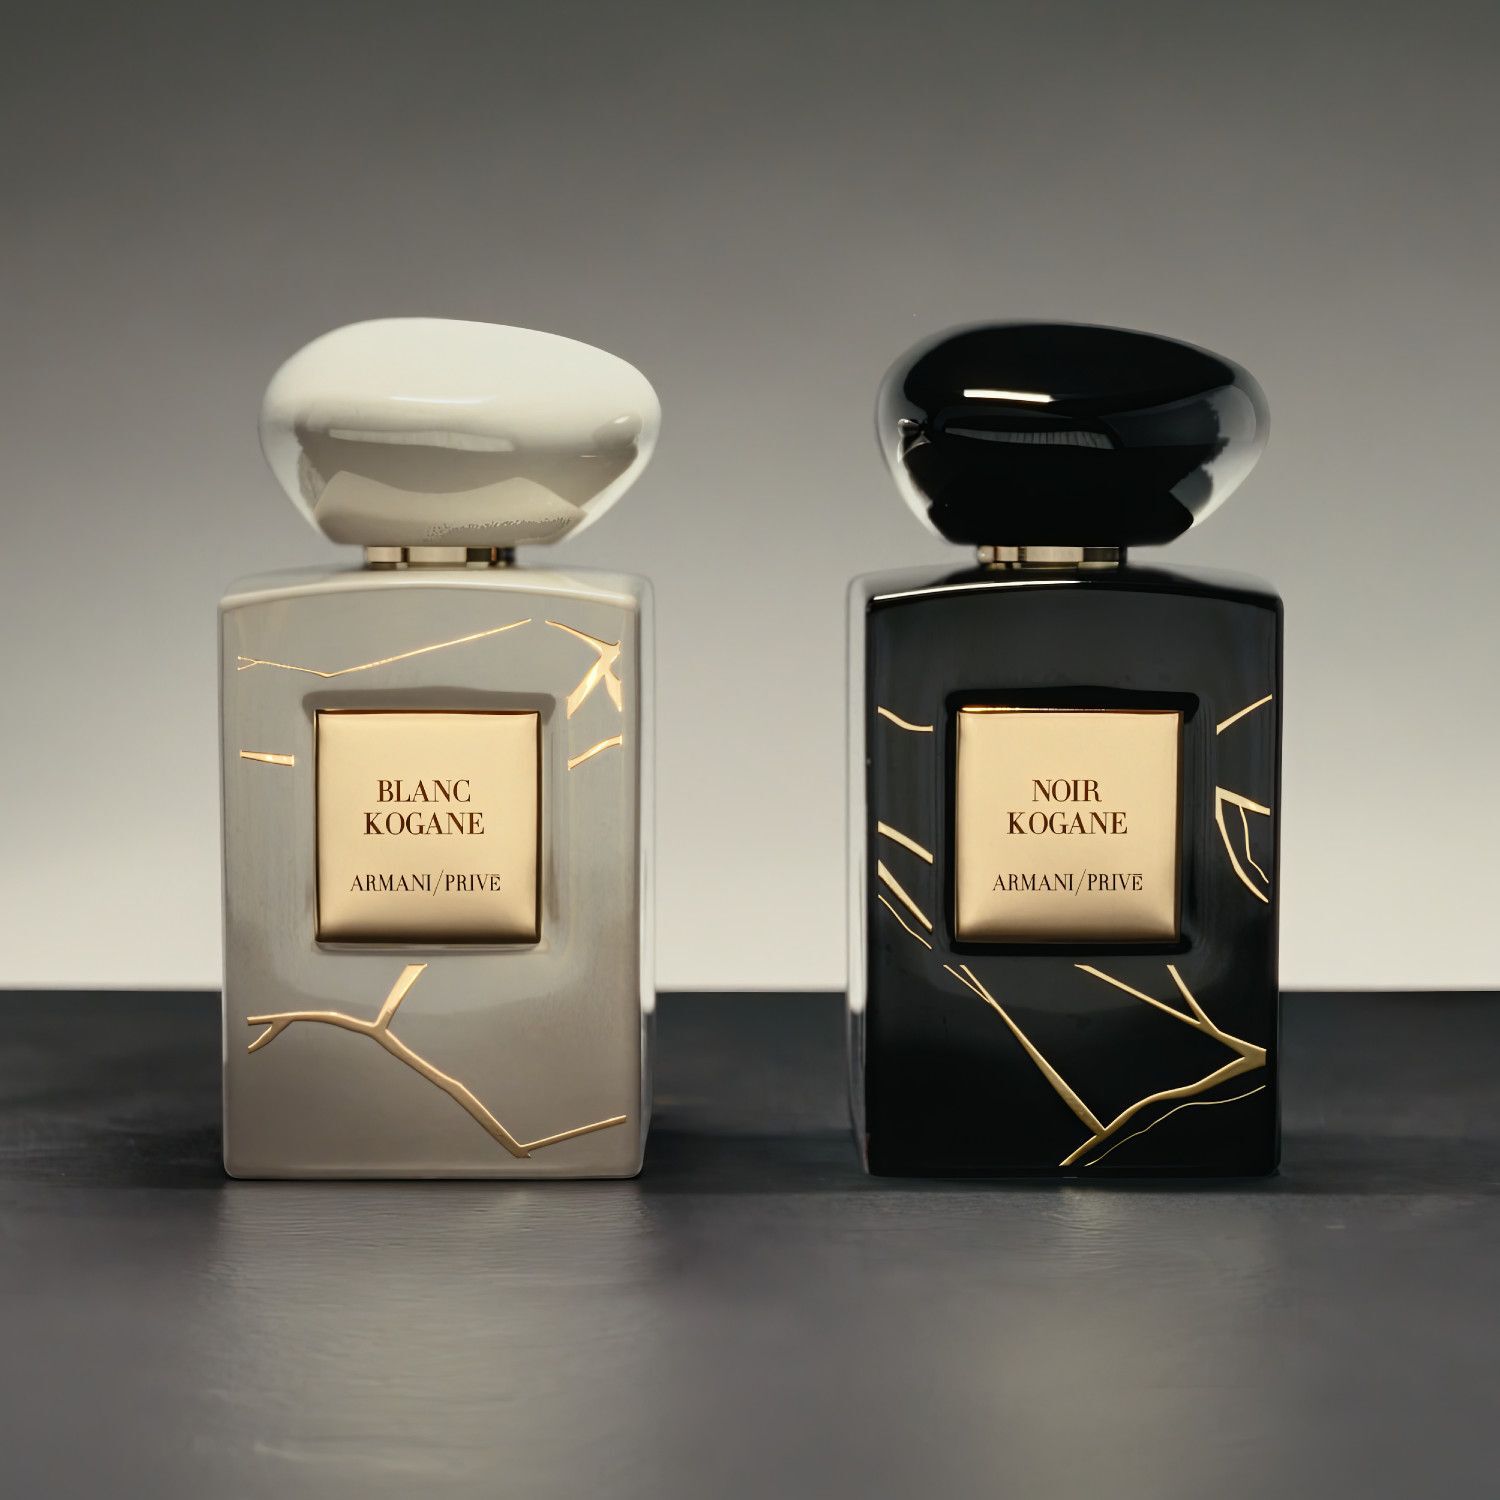 Giorgio Armani Prive Blanc Kogane EDP | My Perfume Shop Australia